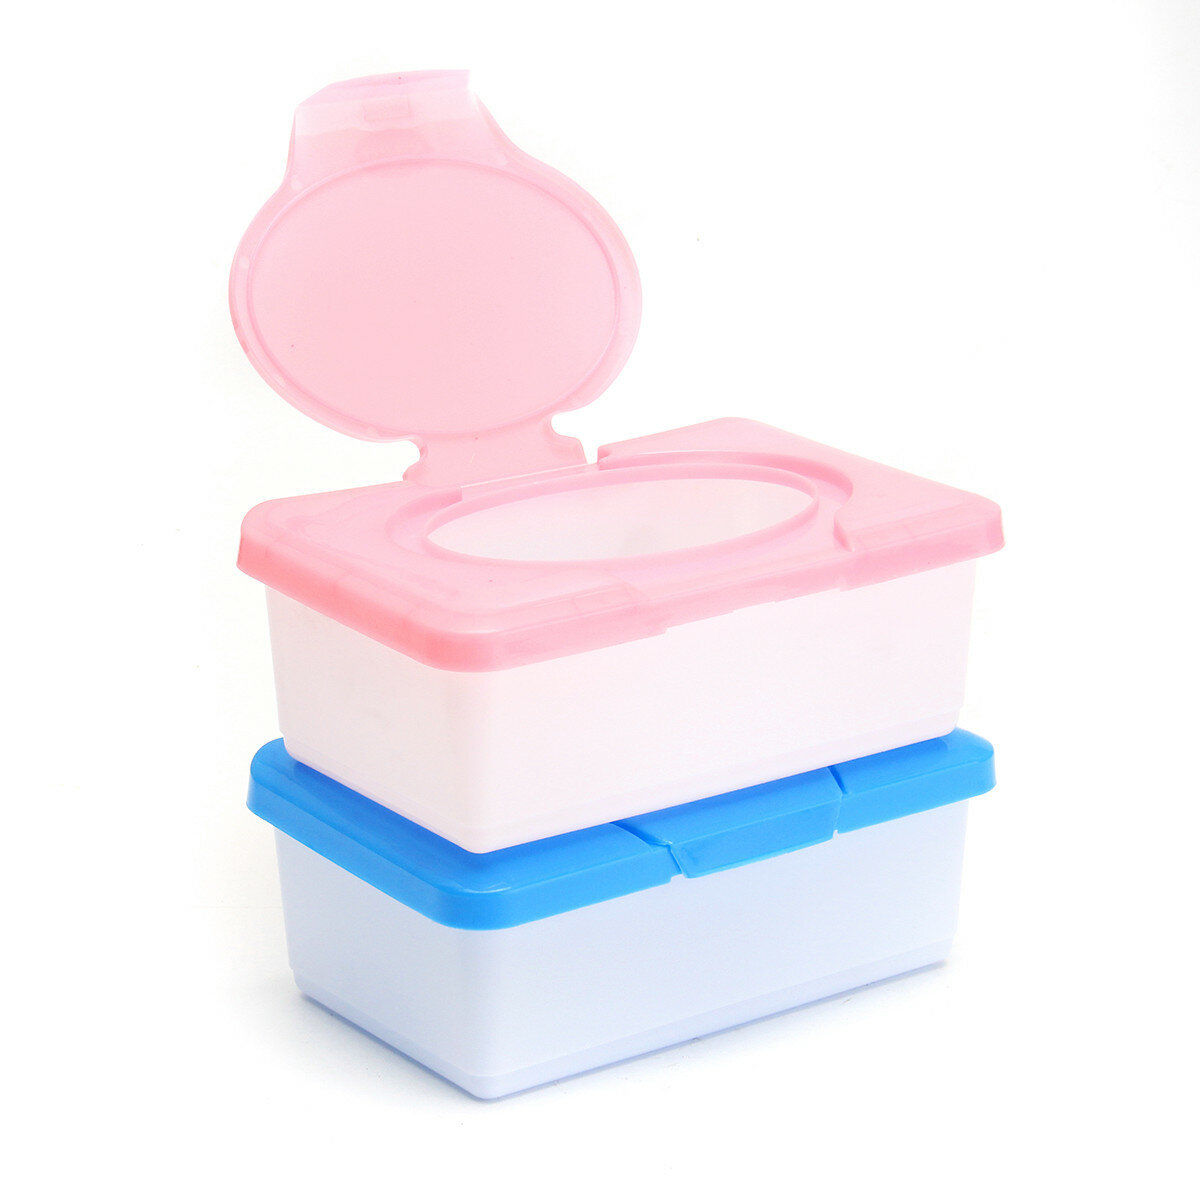 Wet Tissue Box Plastic Case Real Tissue Case Baby Wipes Press Pop-up Design Home Tissue Holder Accessories